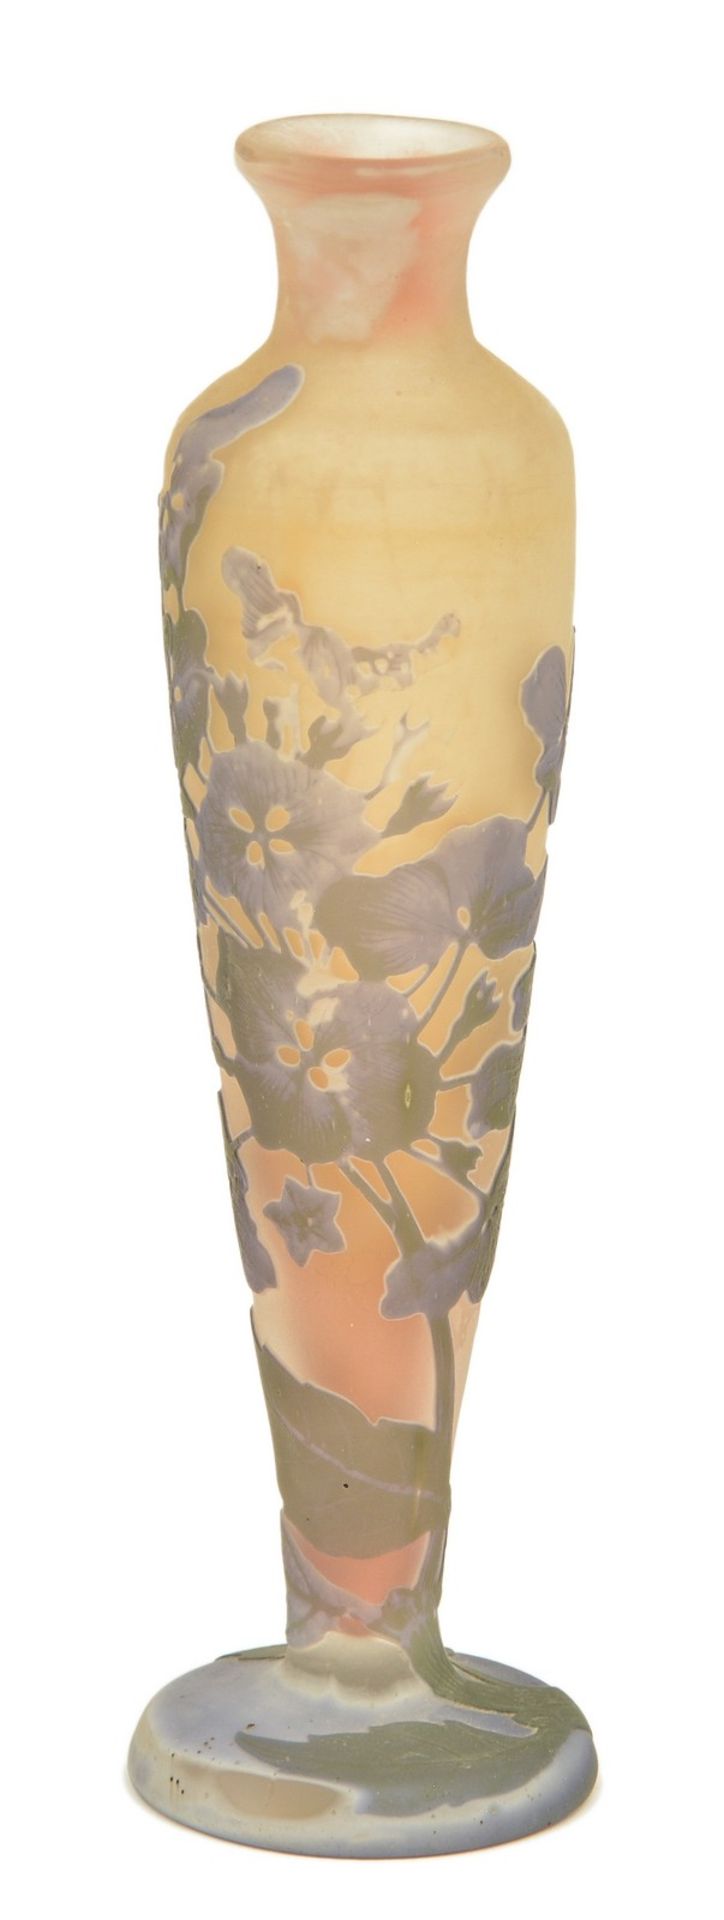 An Art Nouveau and period cameo glass vase, signed Gallé, H 21,4 cm